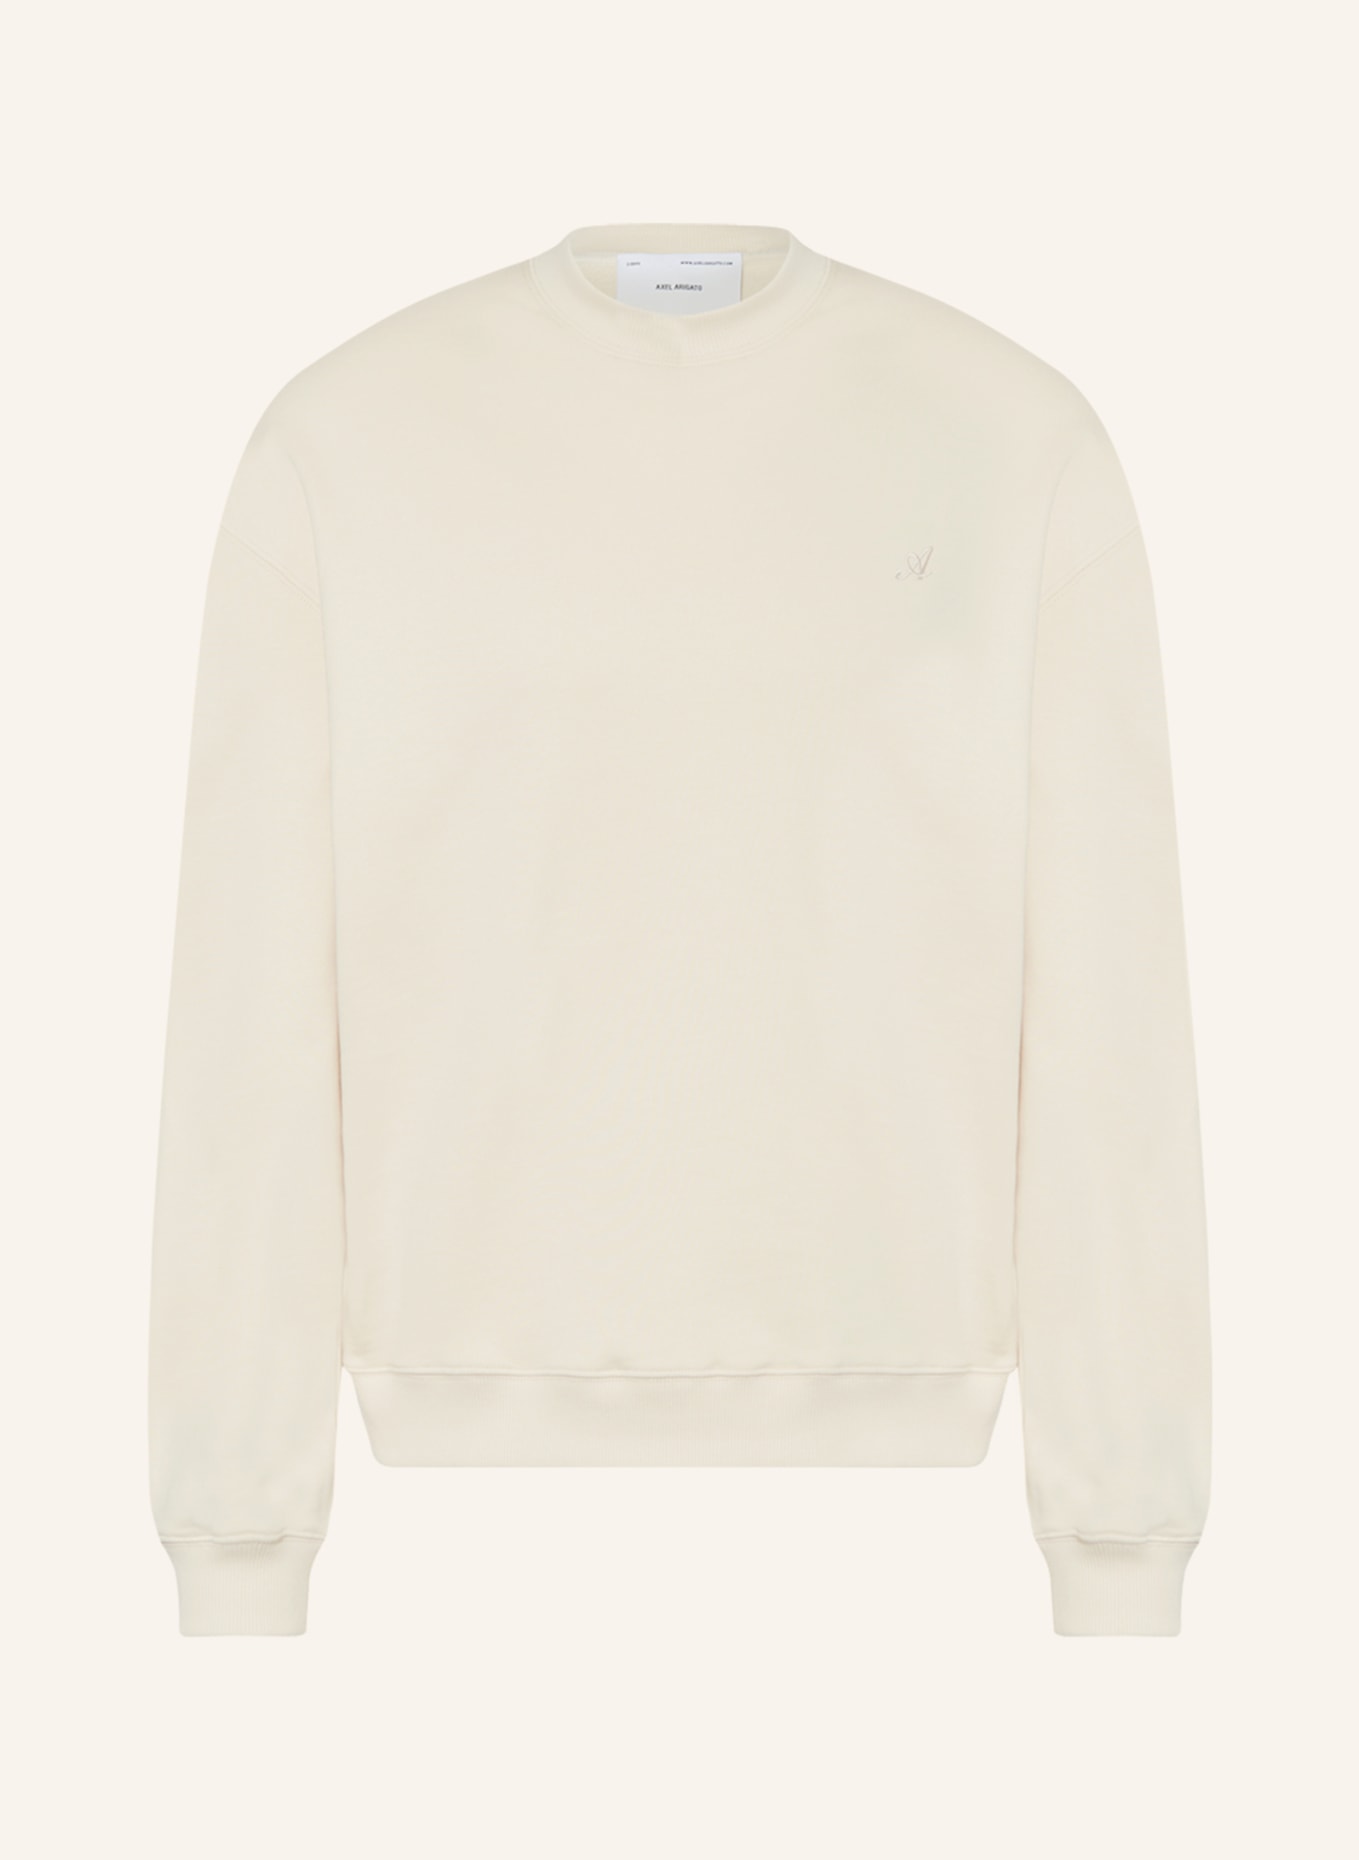 AXEL ARIGATO Sweatshirt HONOR, Farbe: BEIGE (Bild 1)